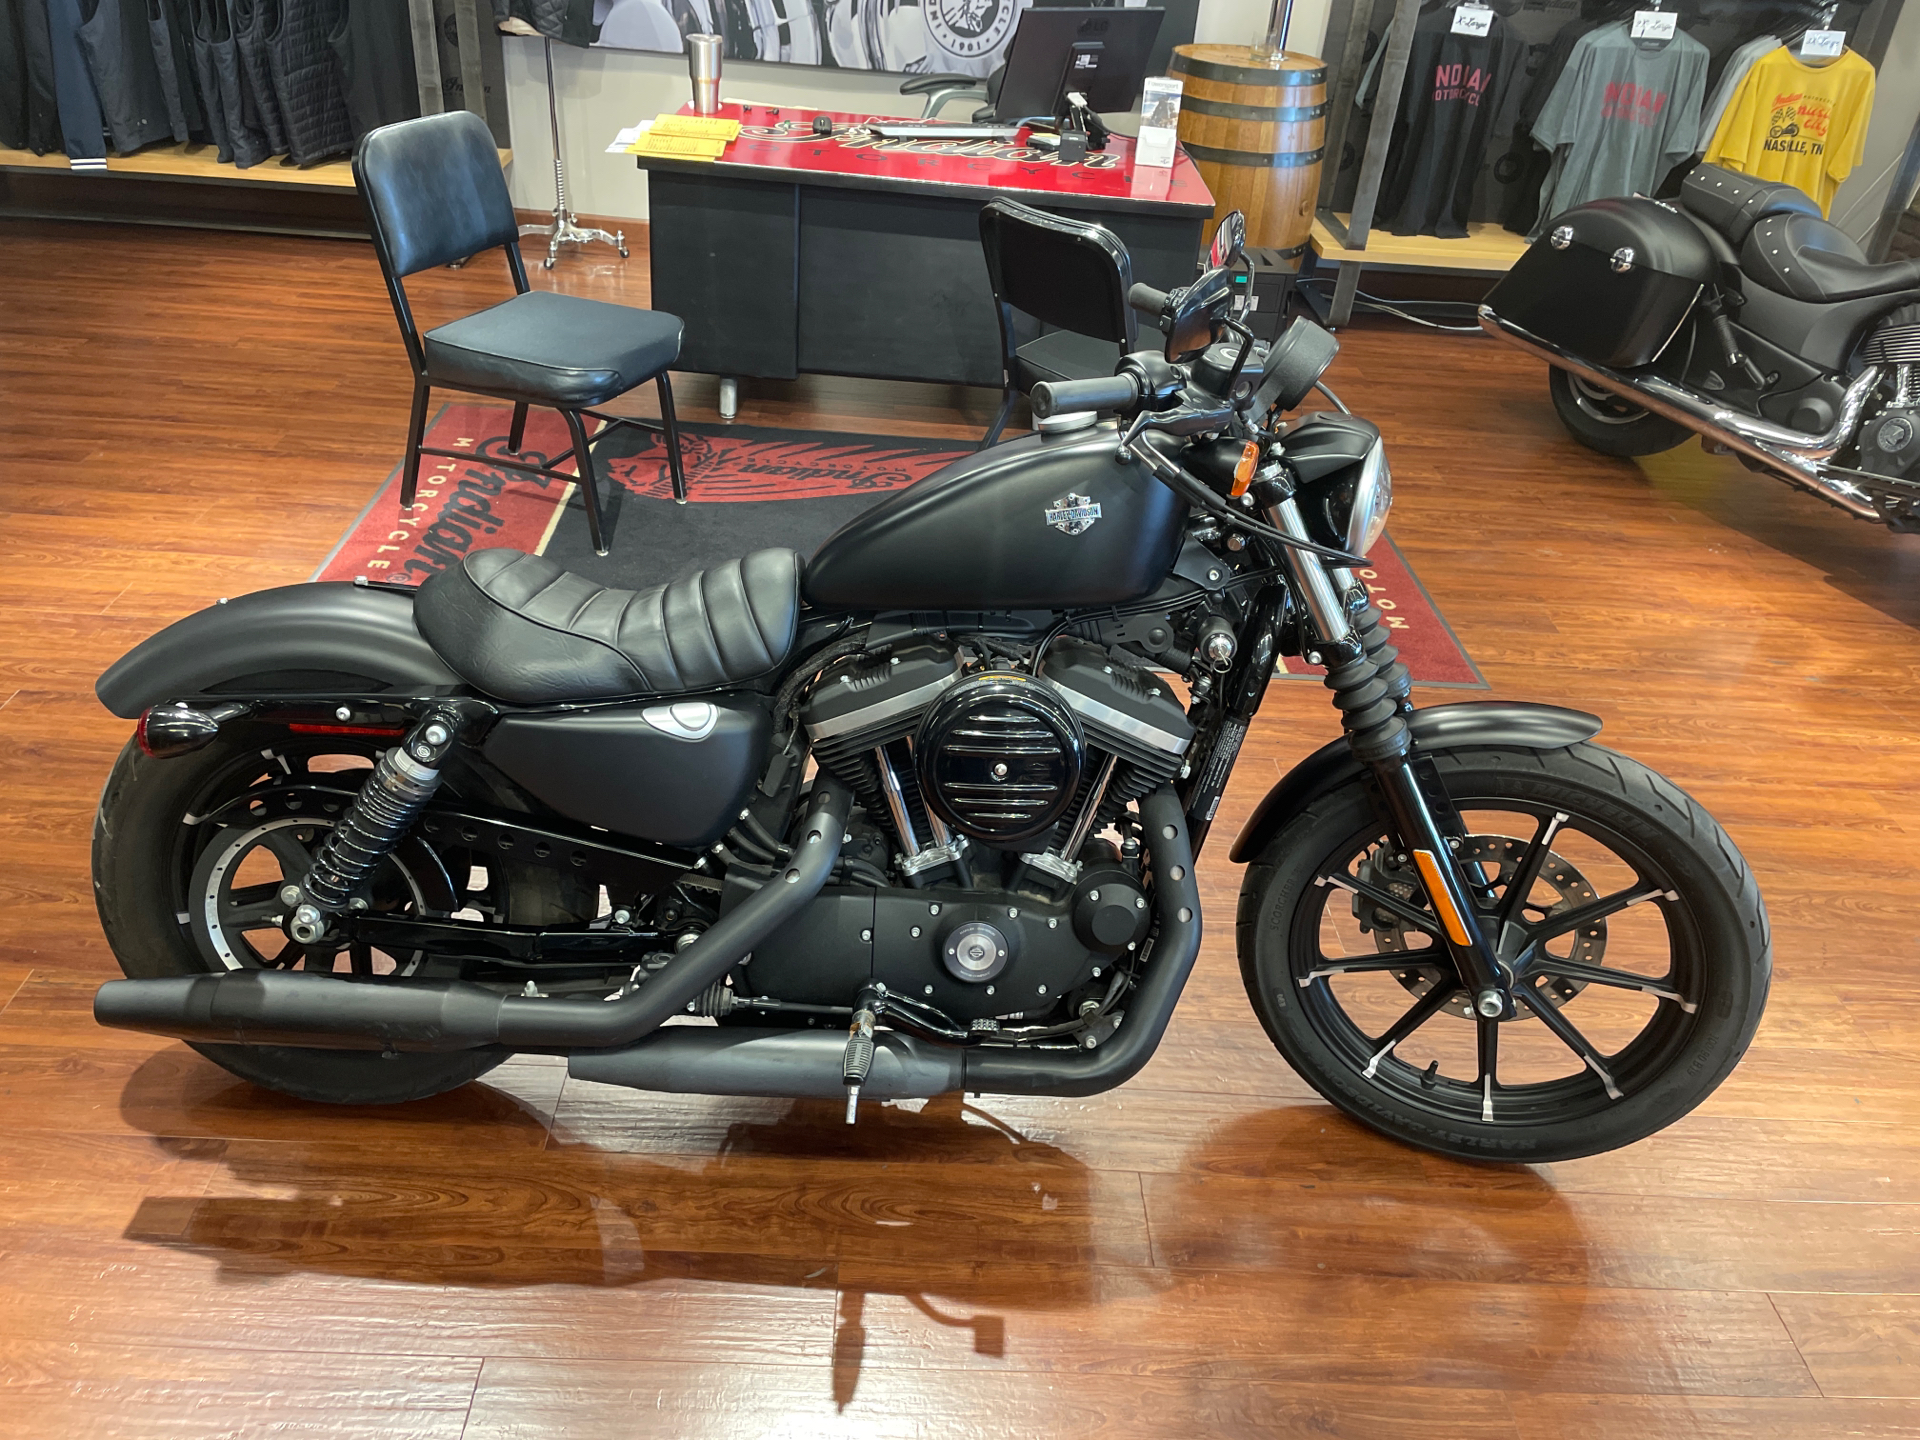 2017 Harley Davidson Iron 883 For Sale Used Black Denim Motorcycles In Nashville Tn Har427085